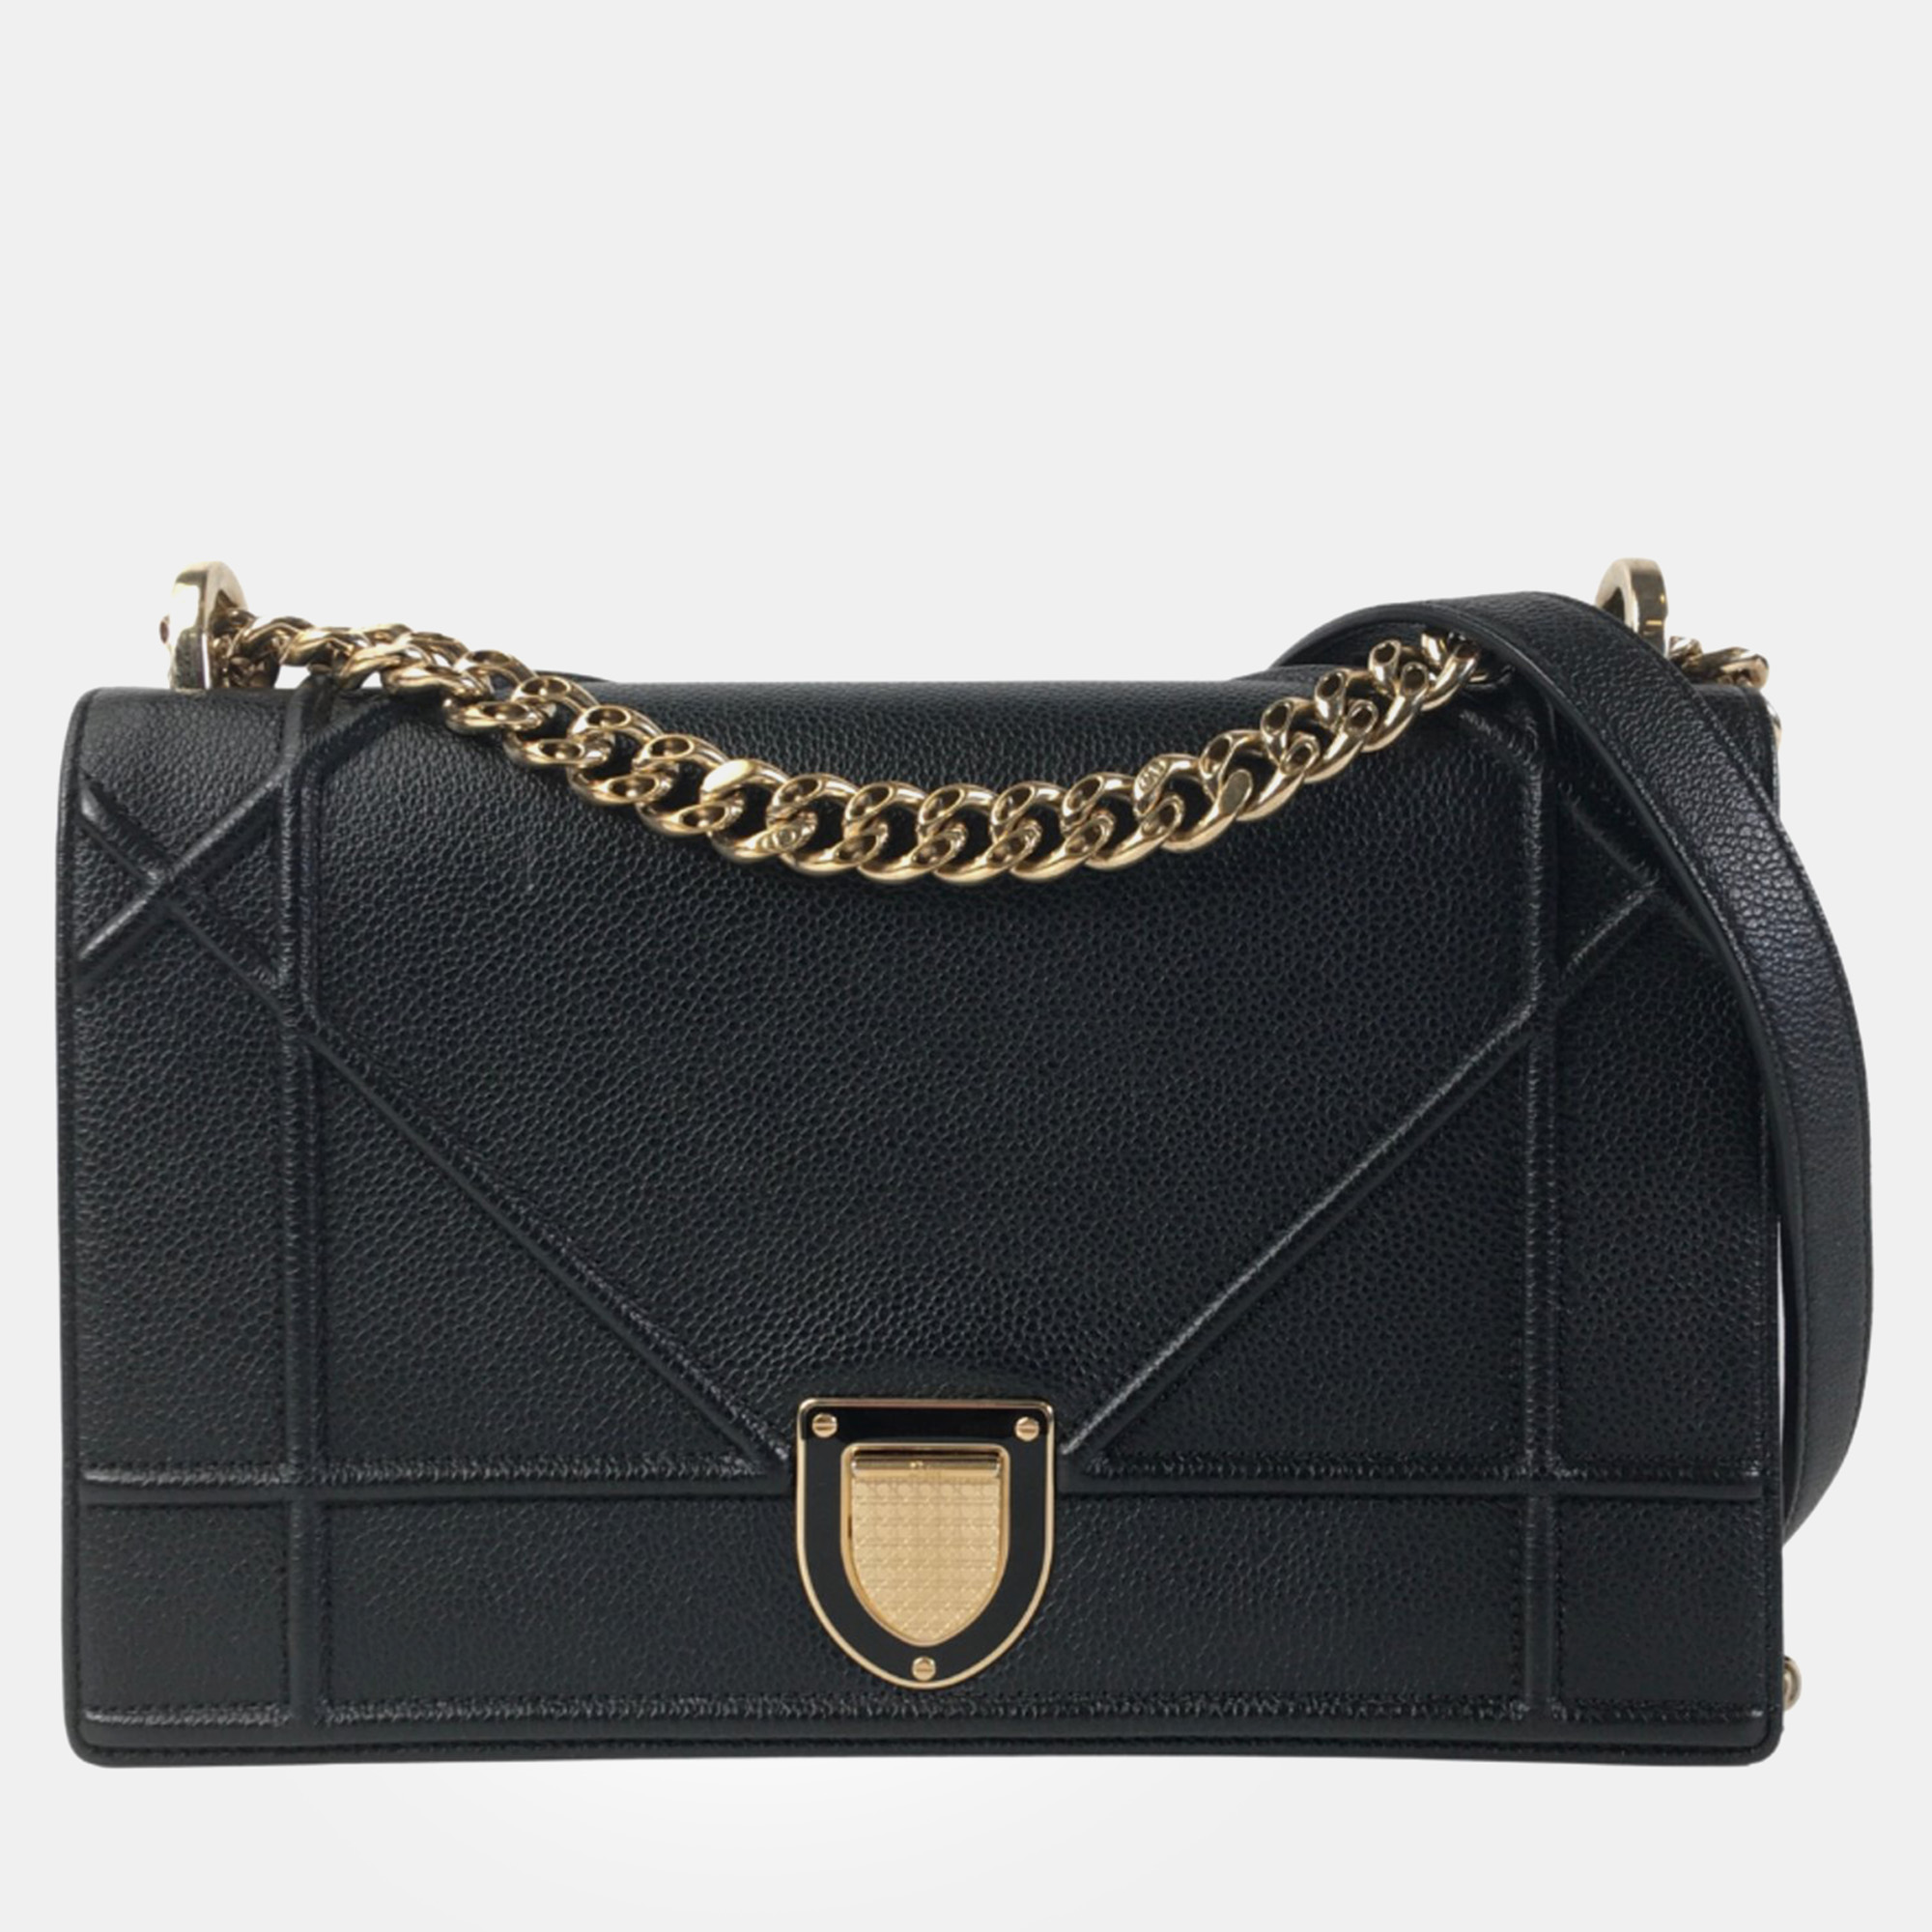 Dior black leather medium diorama shoulder bag